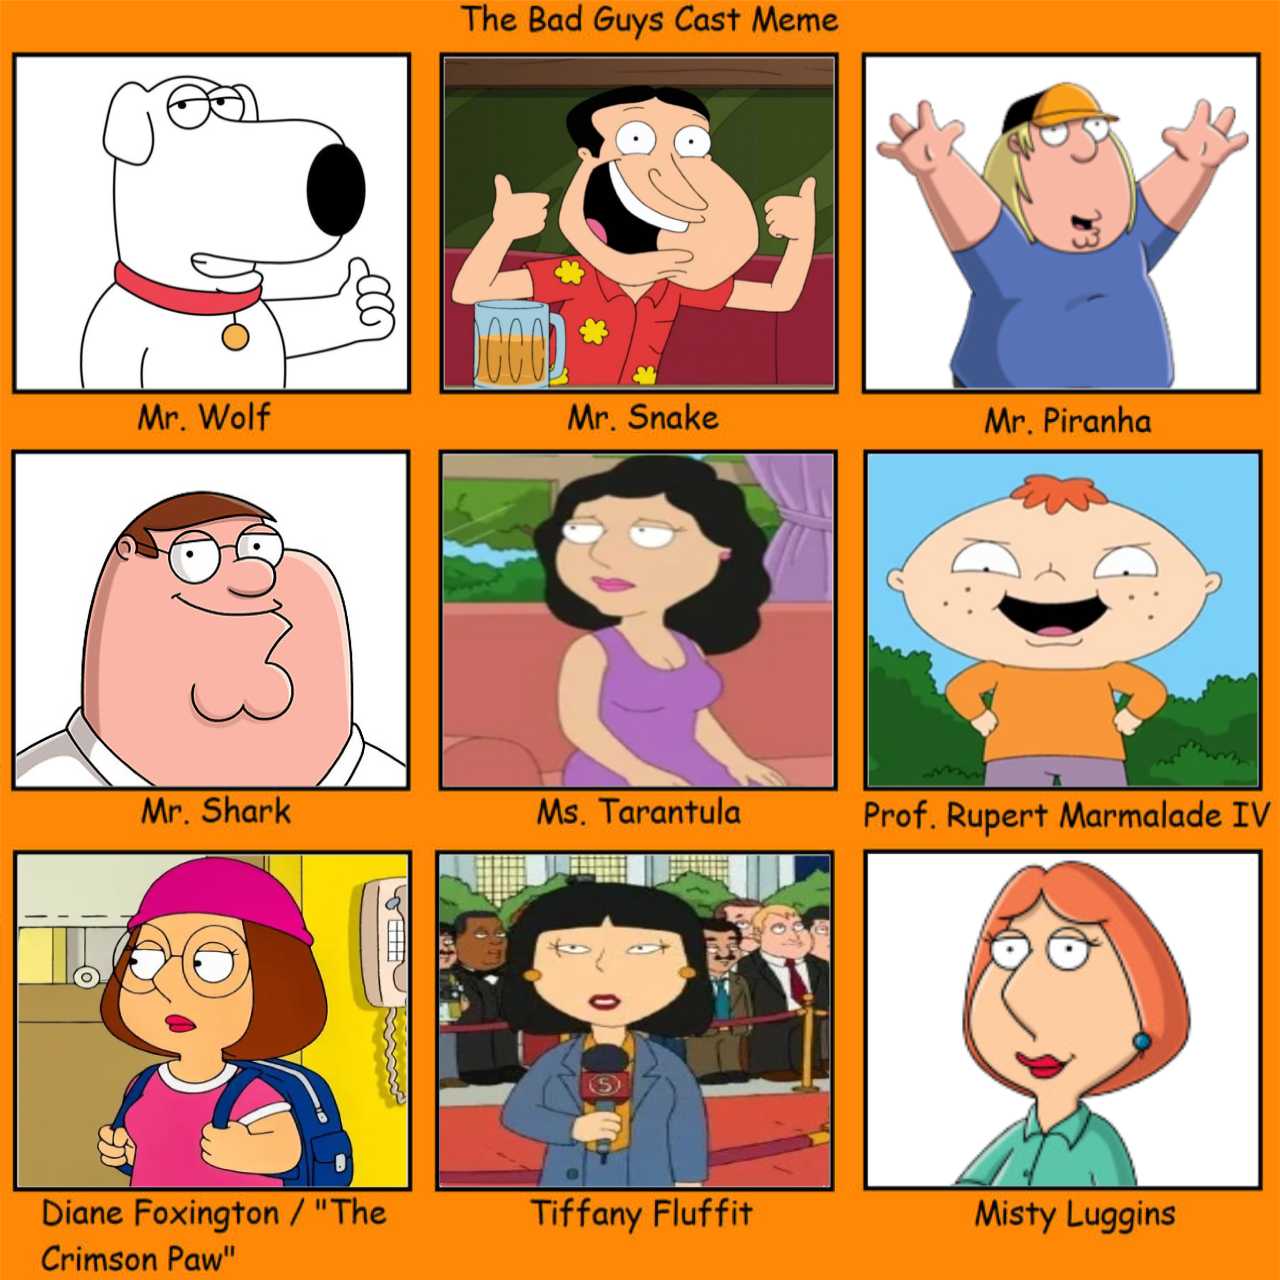 The Bad Guys Cast Meme Family Guy Version by ROTGANDTBG11011 on DeviantArt